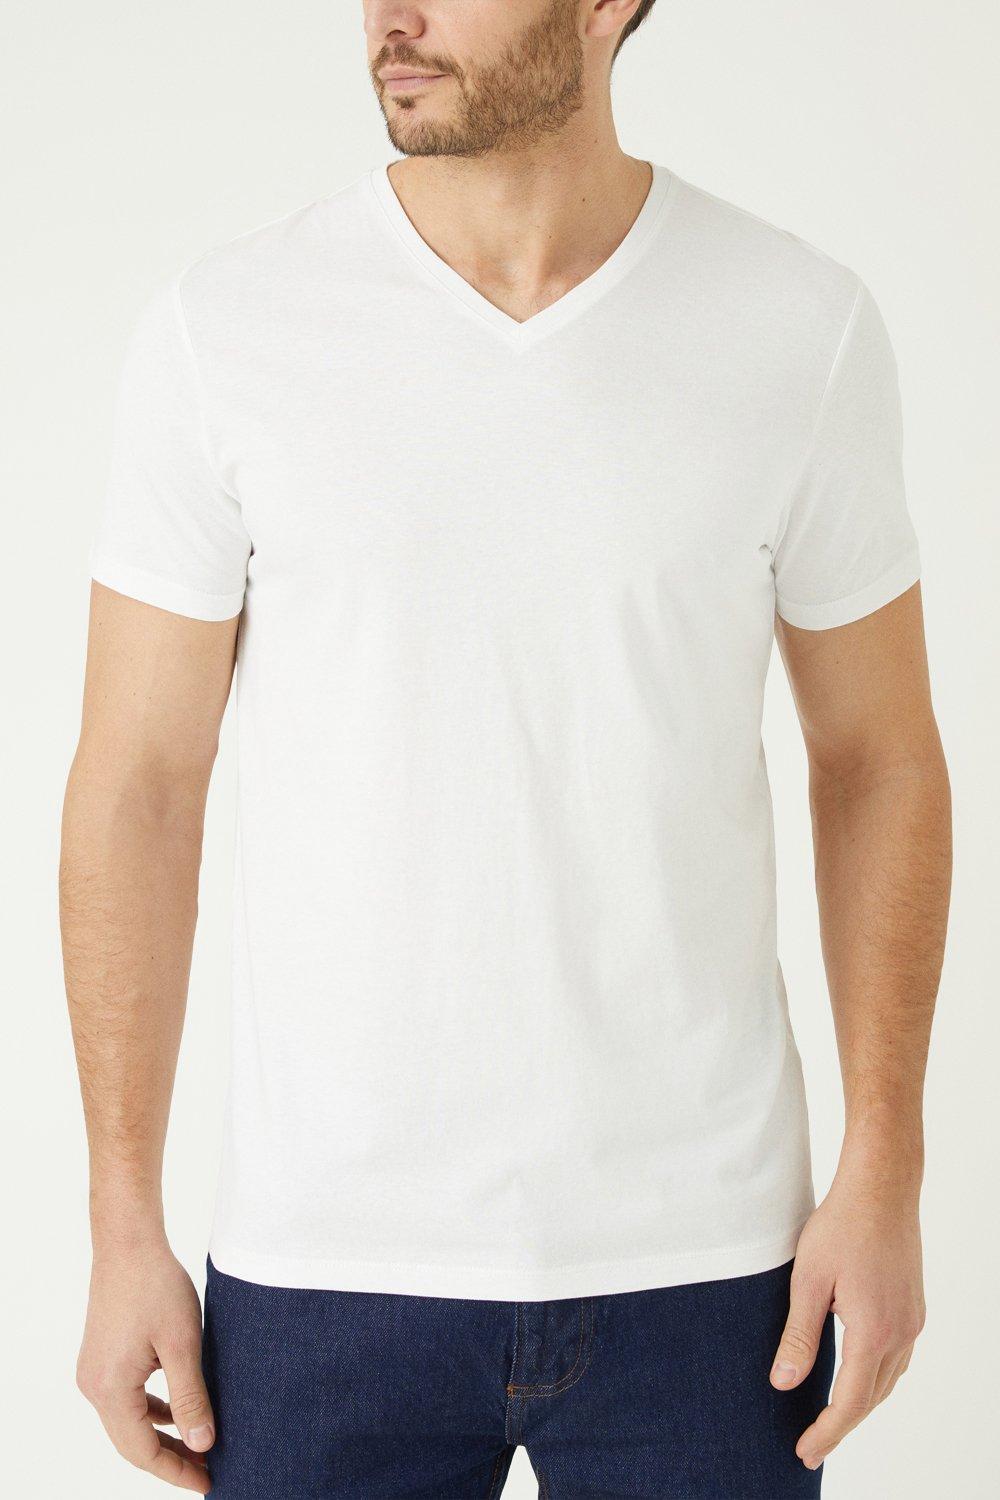 T-Shirts | Black, White, Grey 3 Pack V Neck T-shirts | Burton